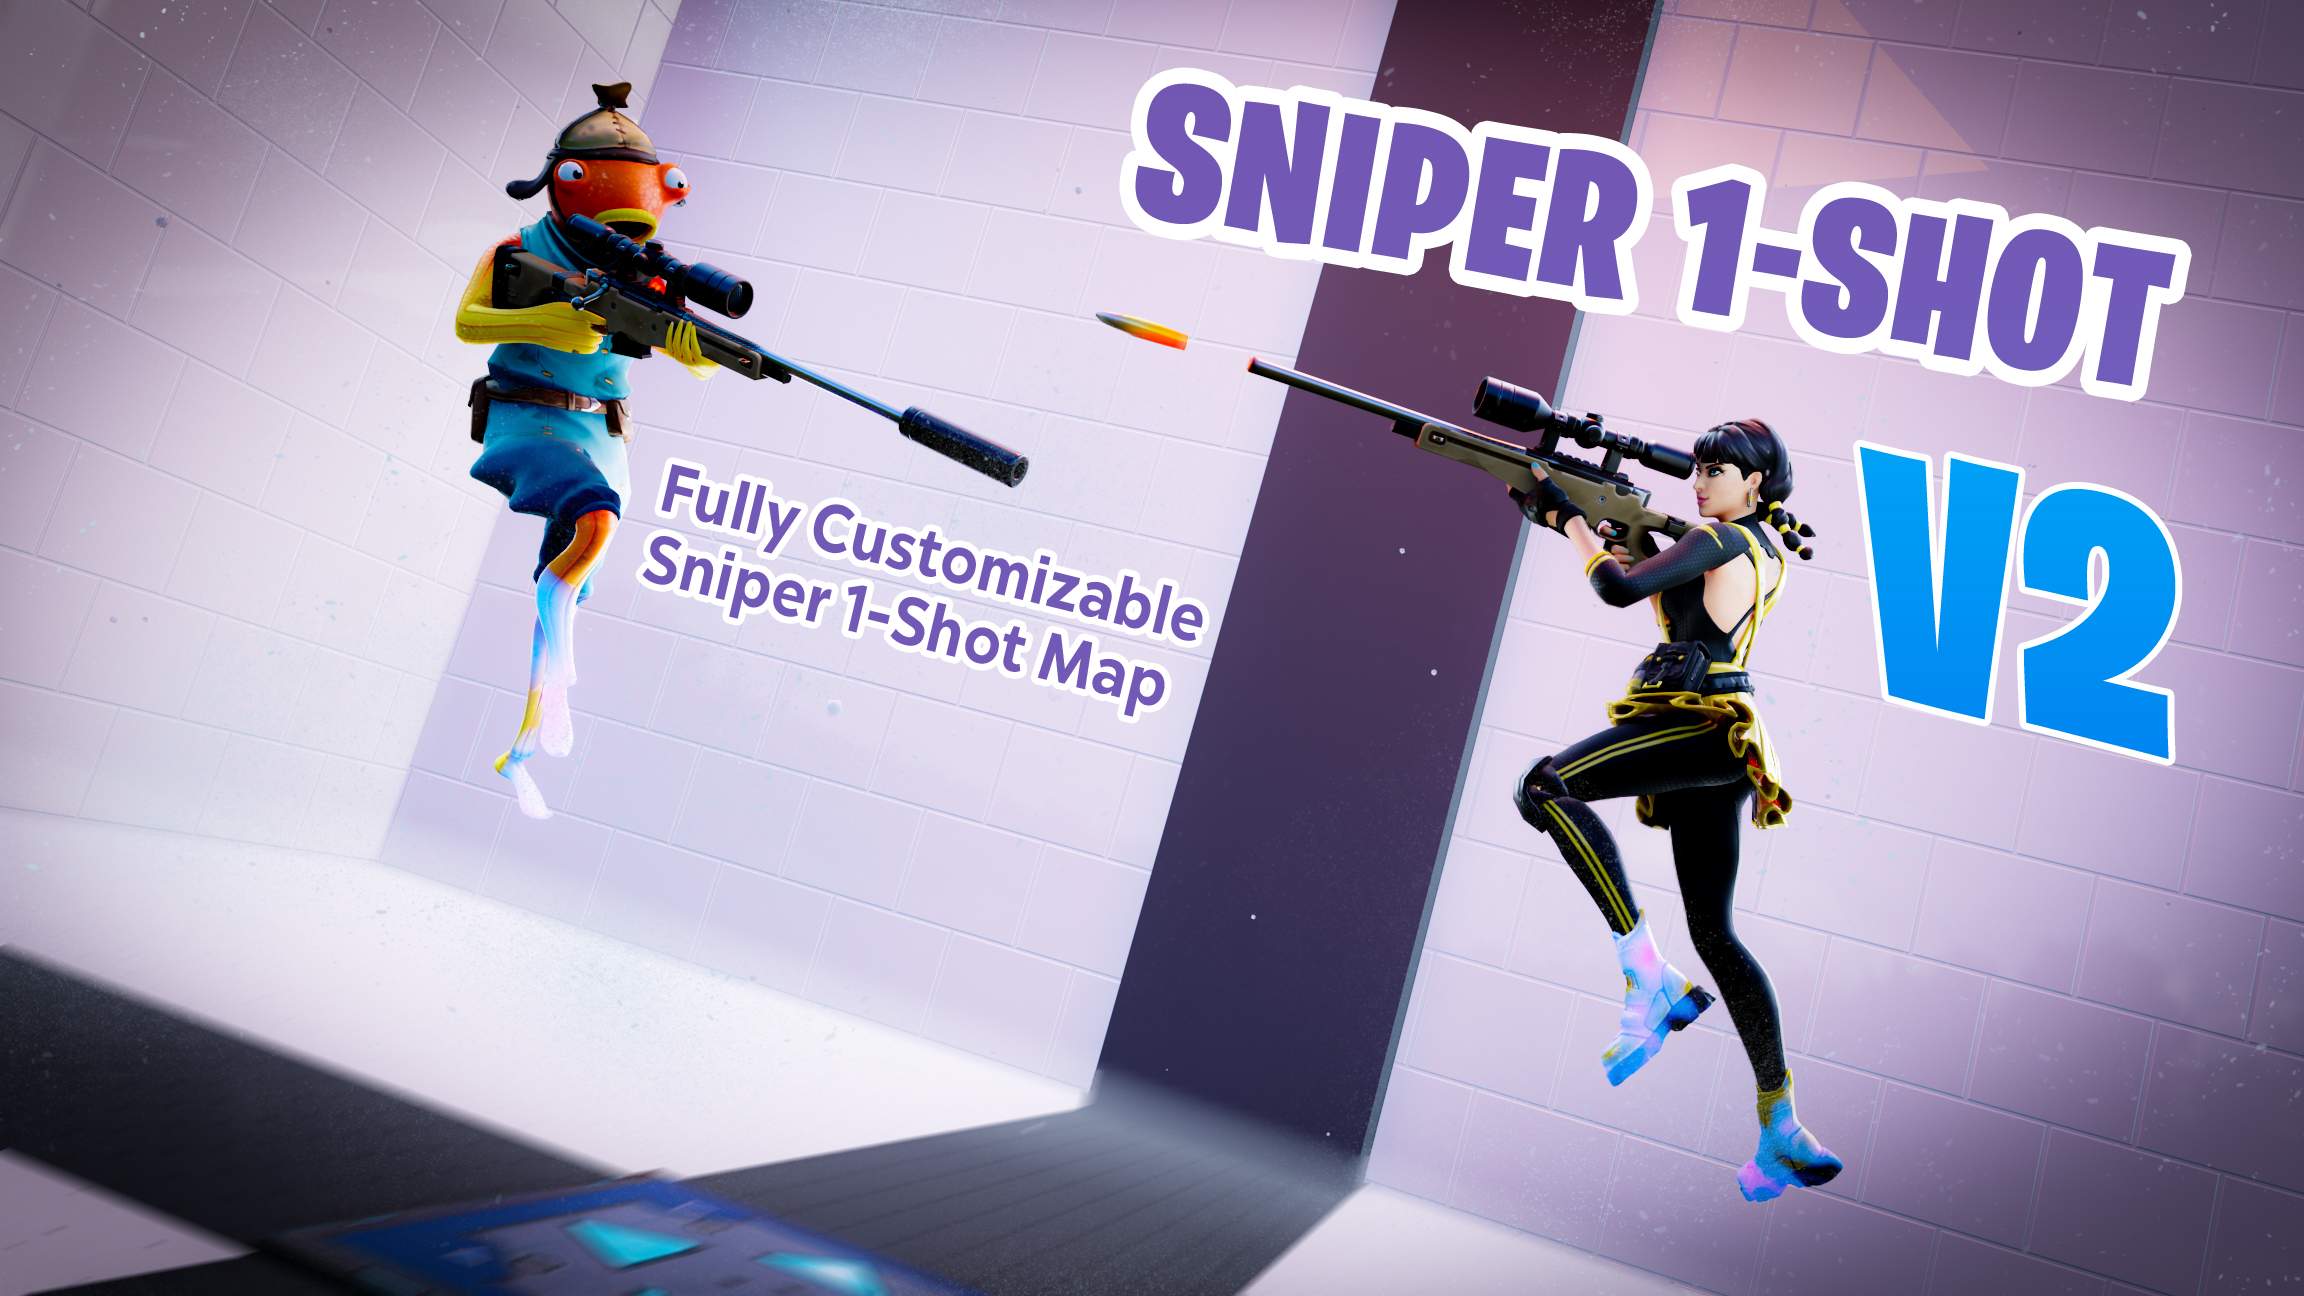 Sniper 1-shot V2 - Fortnite Creative FFA, Mini Games, and Map Code.